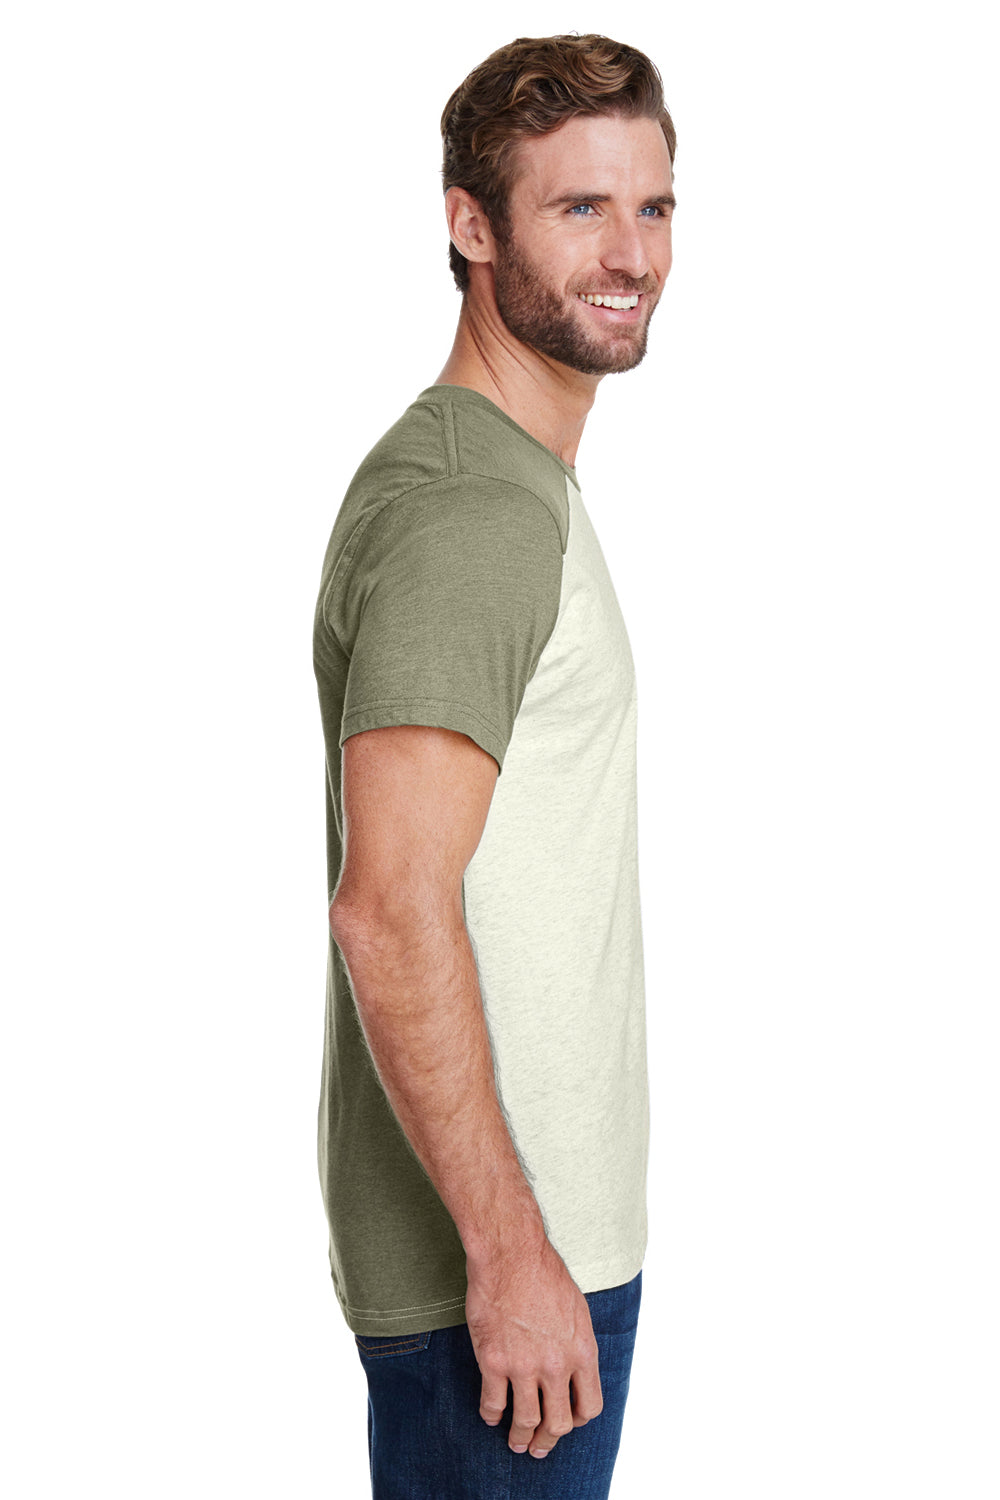 LAT LA6911 Mens Fine Jersey Forward Shoulder Short Sleeve Crewneck T-Shirt Heather Natural/Military Green Side